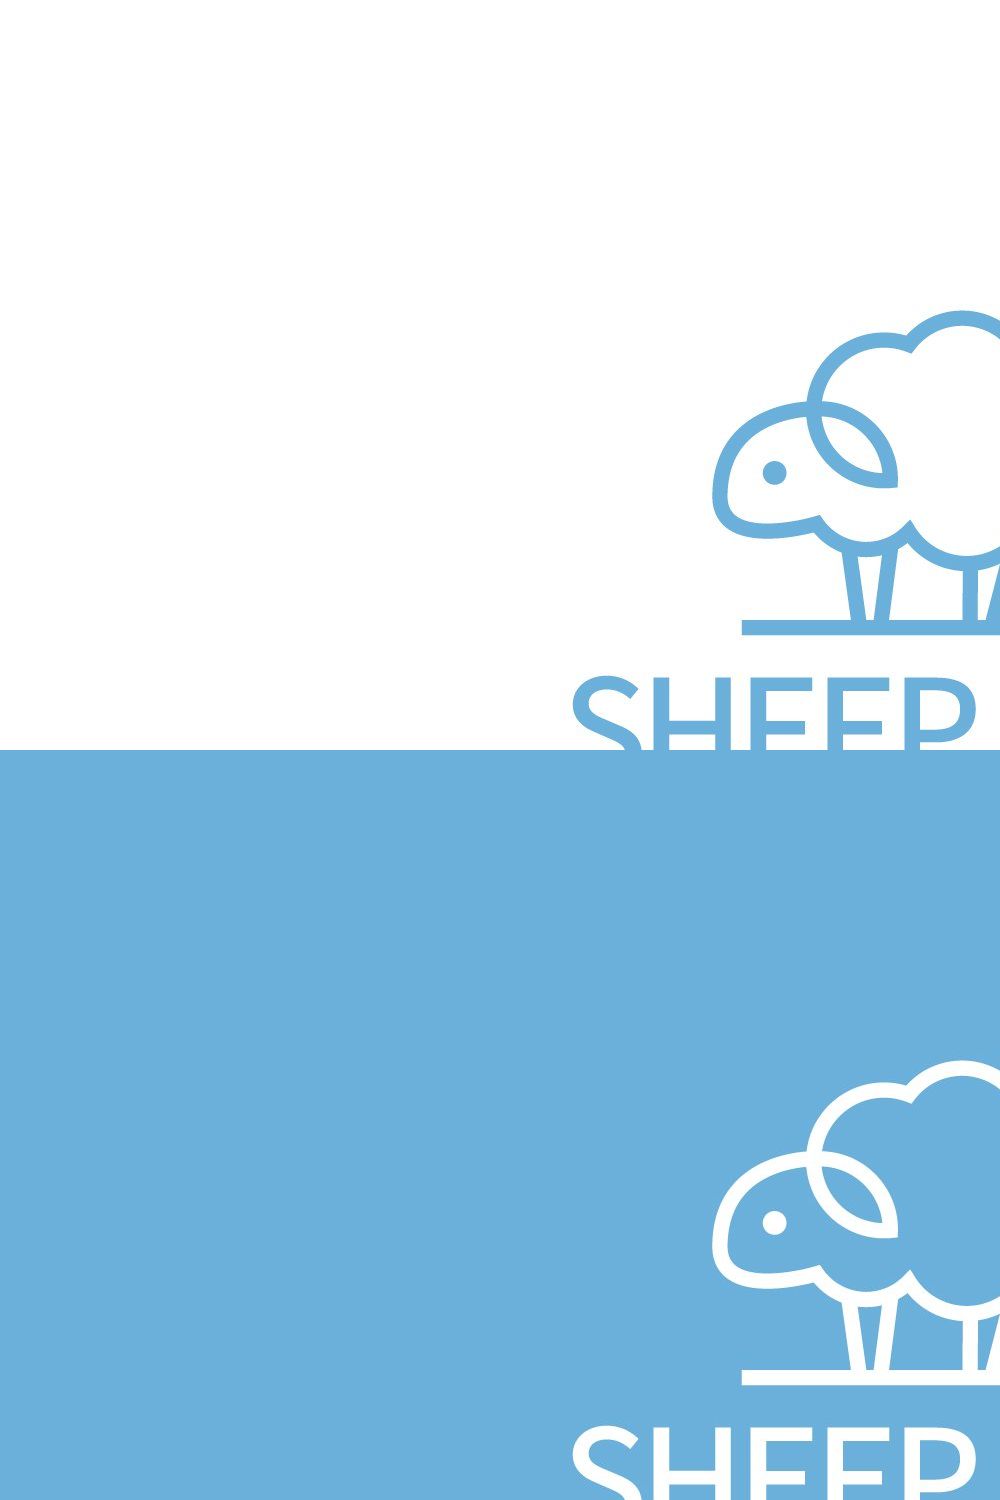 sheep logo pinterest preview image.